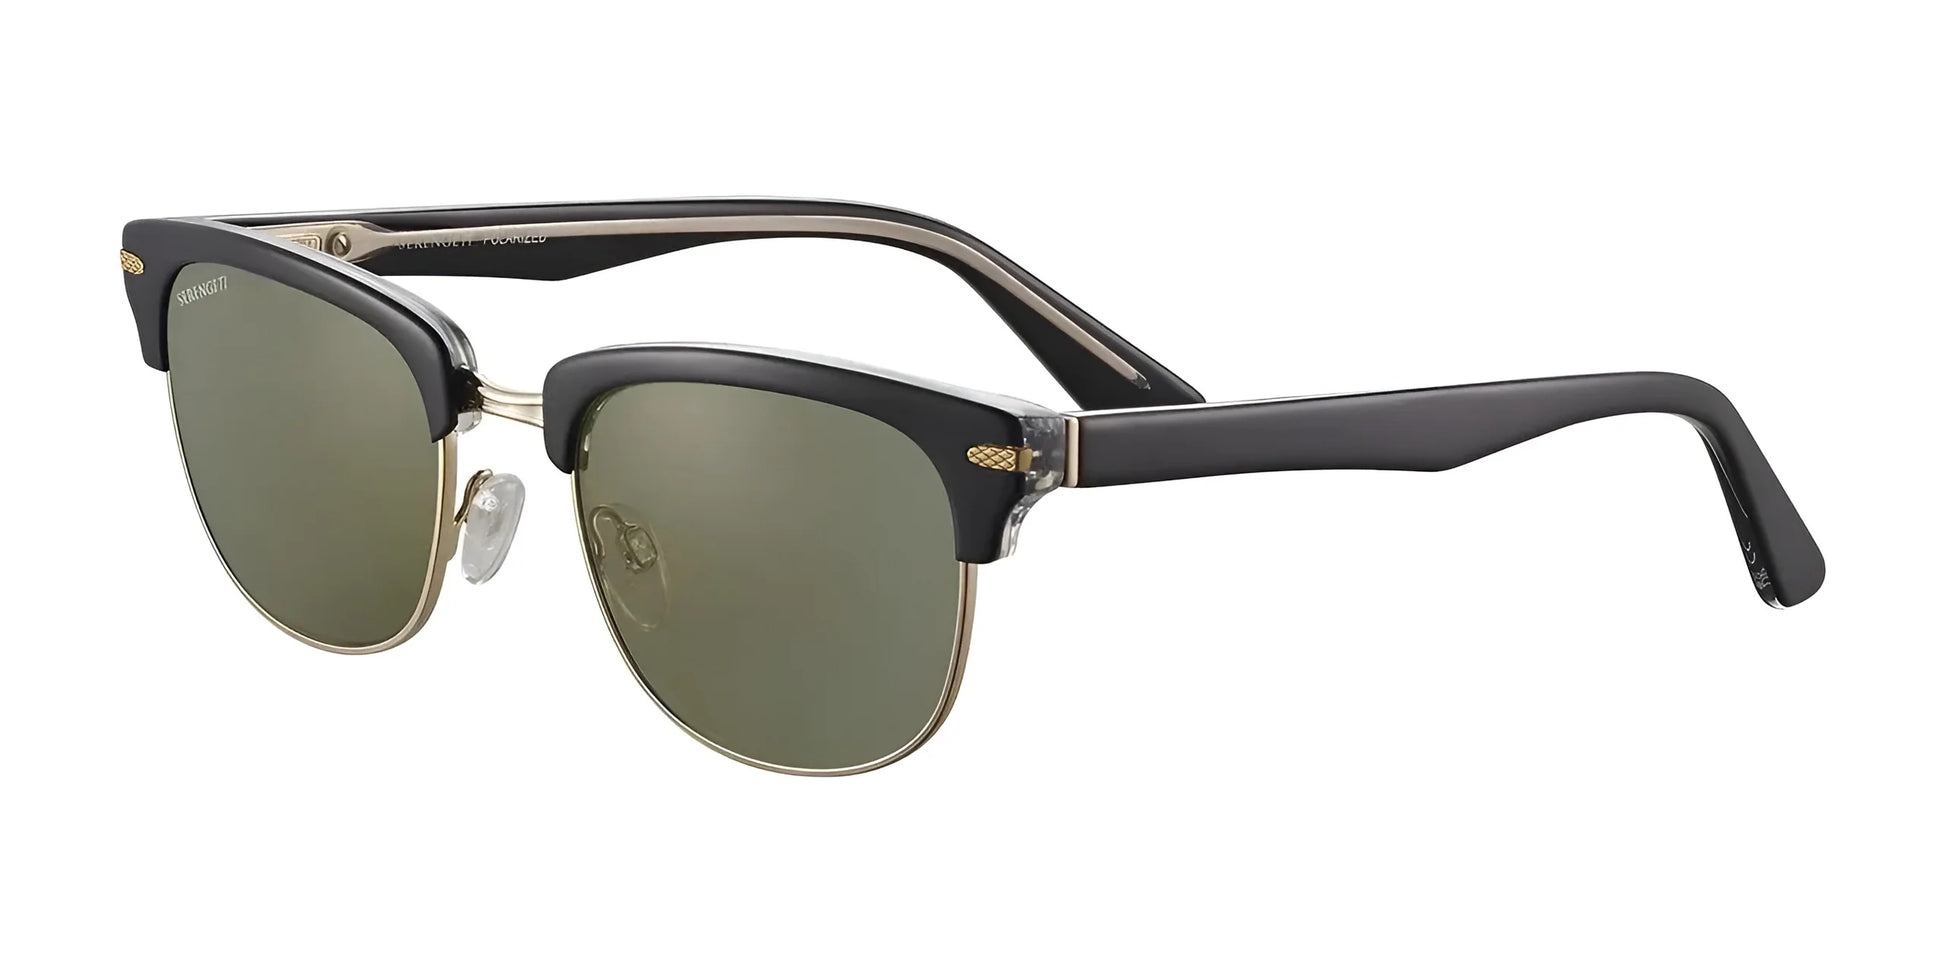 Serengeti CHADWICK Sunglasses Shiny Black Transparent Layer / Mineral Polarized 555nm Cat 3 to 3